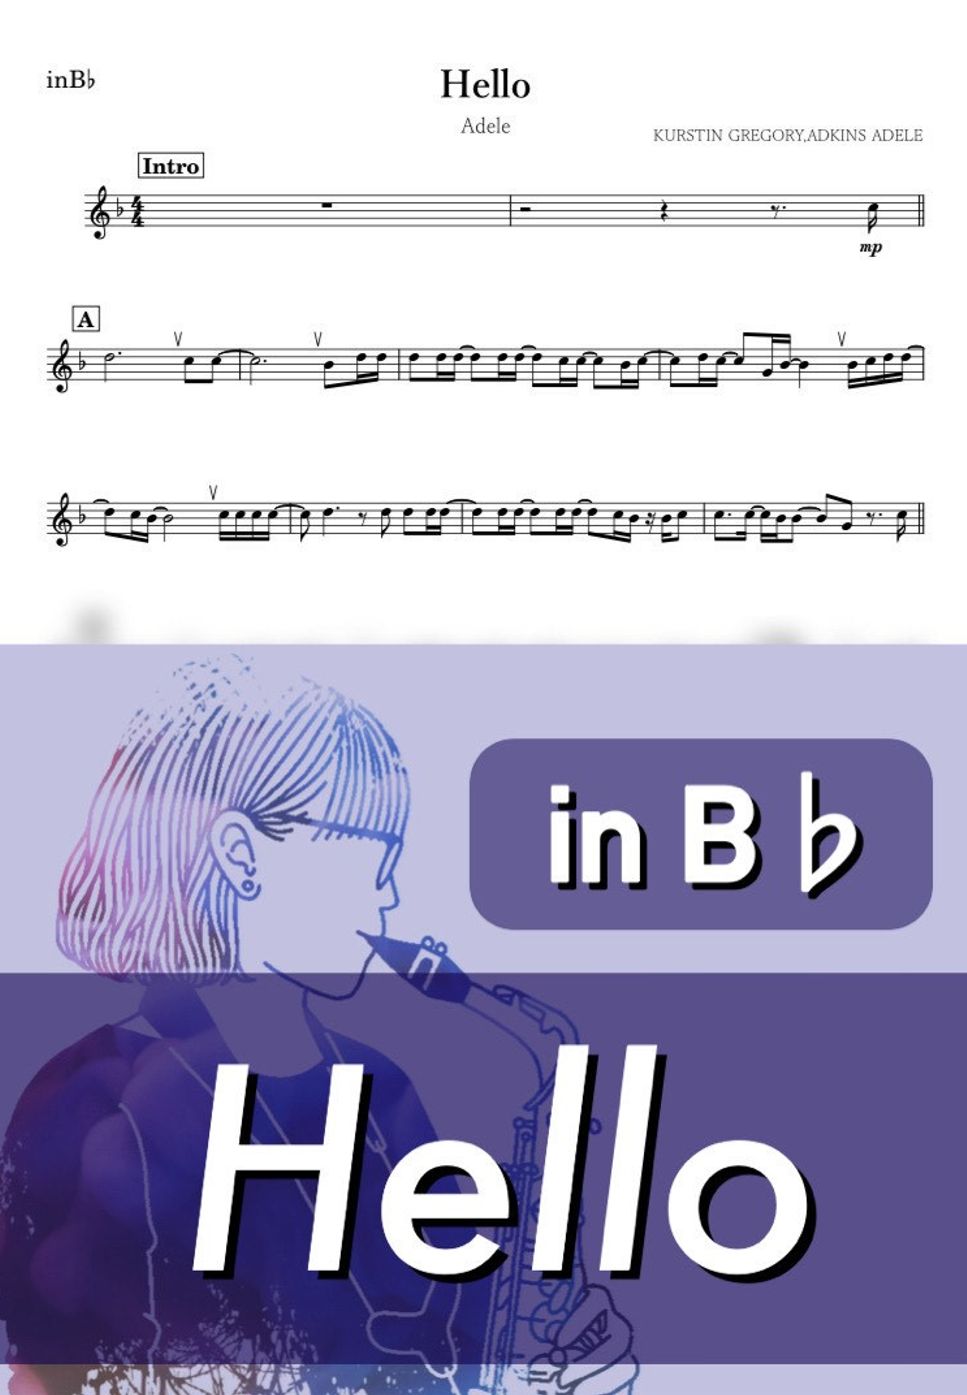 Adele - Hello (B♭) by kanamusic